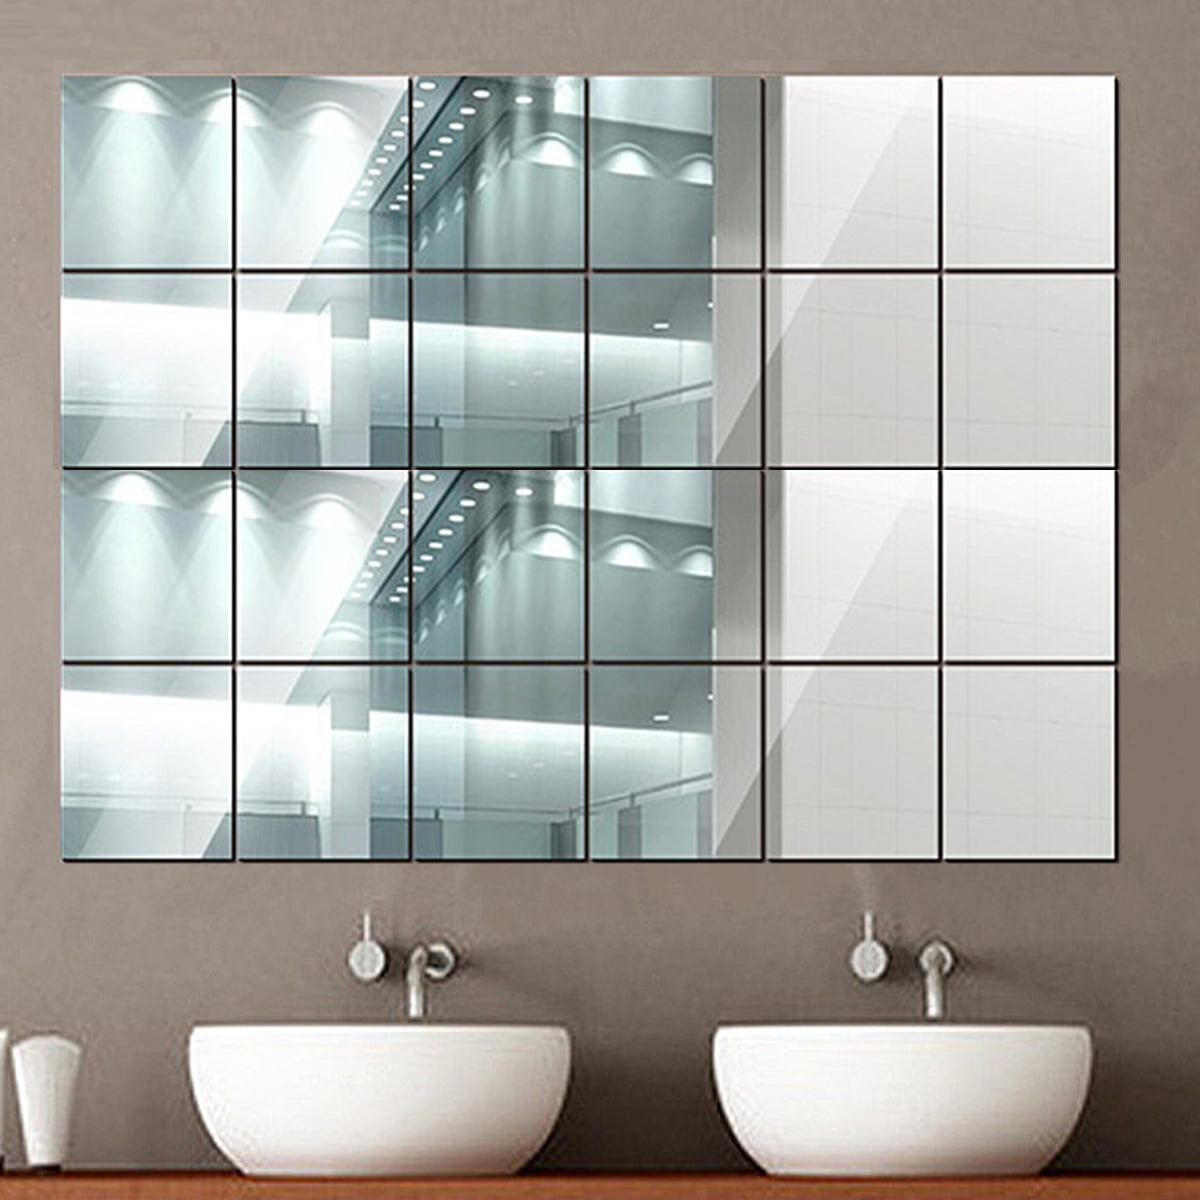 40x Squares Mirror Sticker Self-adhesive Mosaic Tiles Bathroom Decorate 15x15cm 